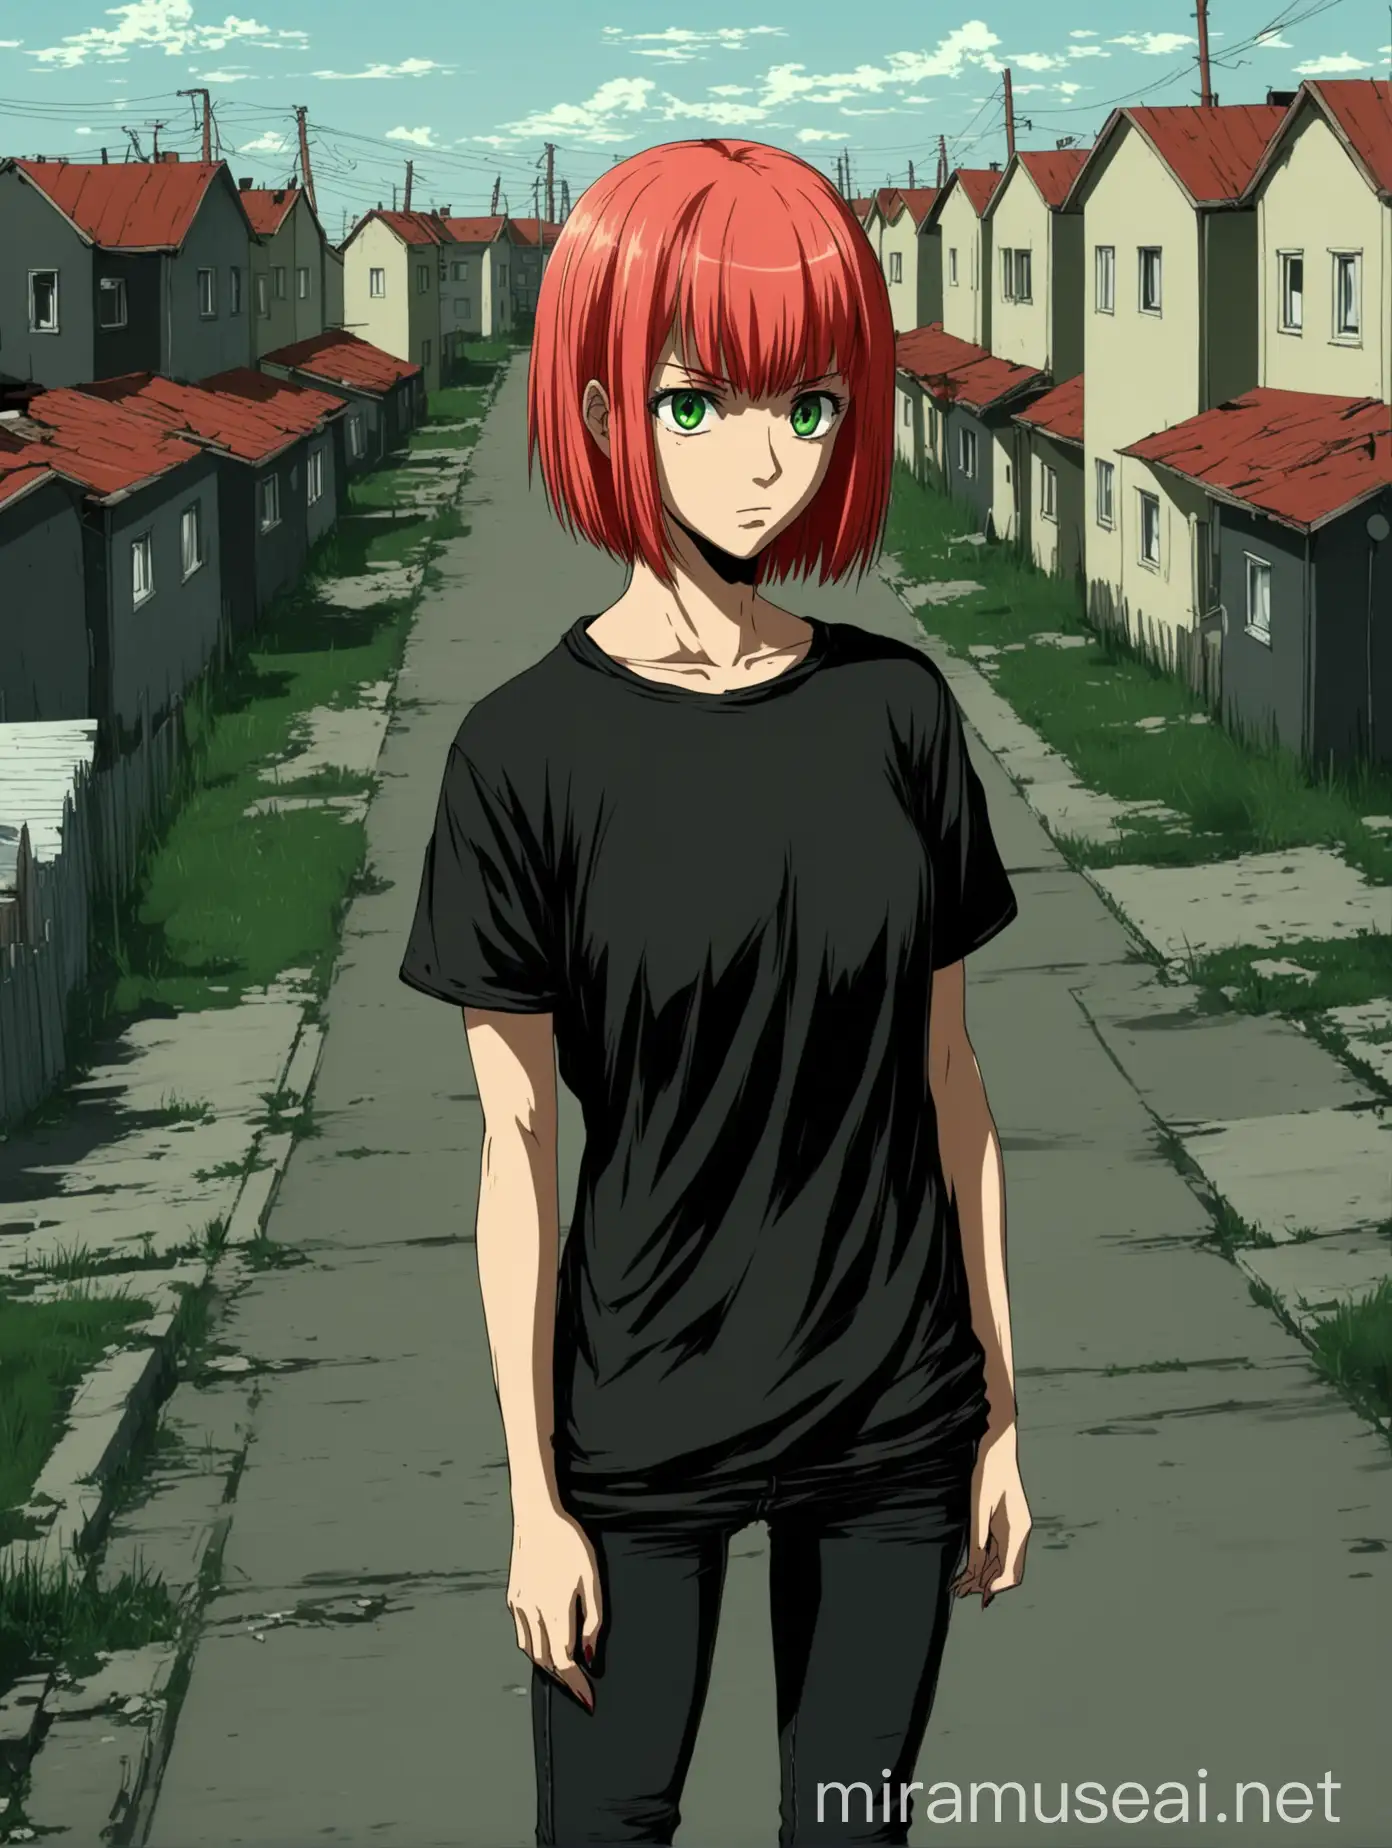 Depressive Russian Neighborhood Anime Woman in Black TShirt and Jeans